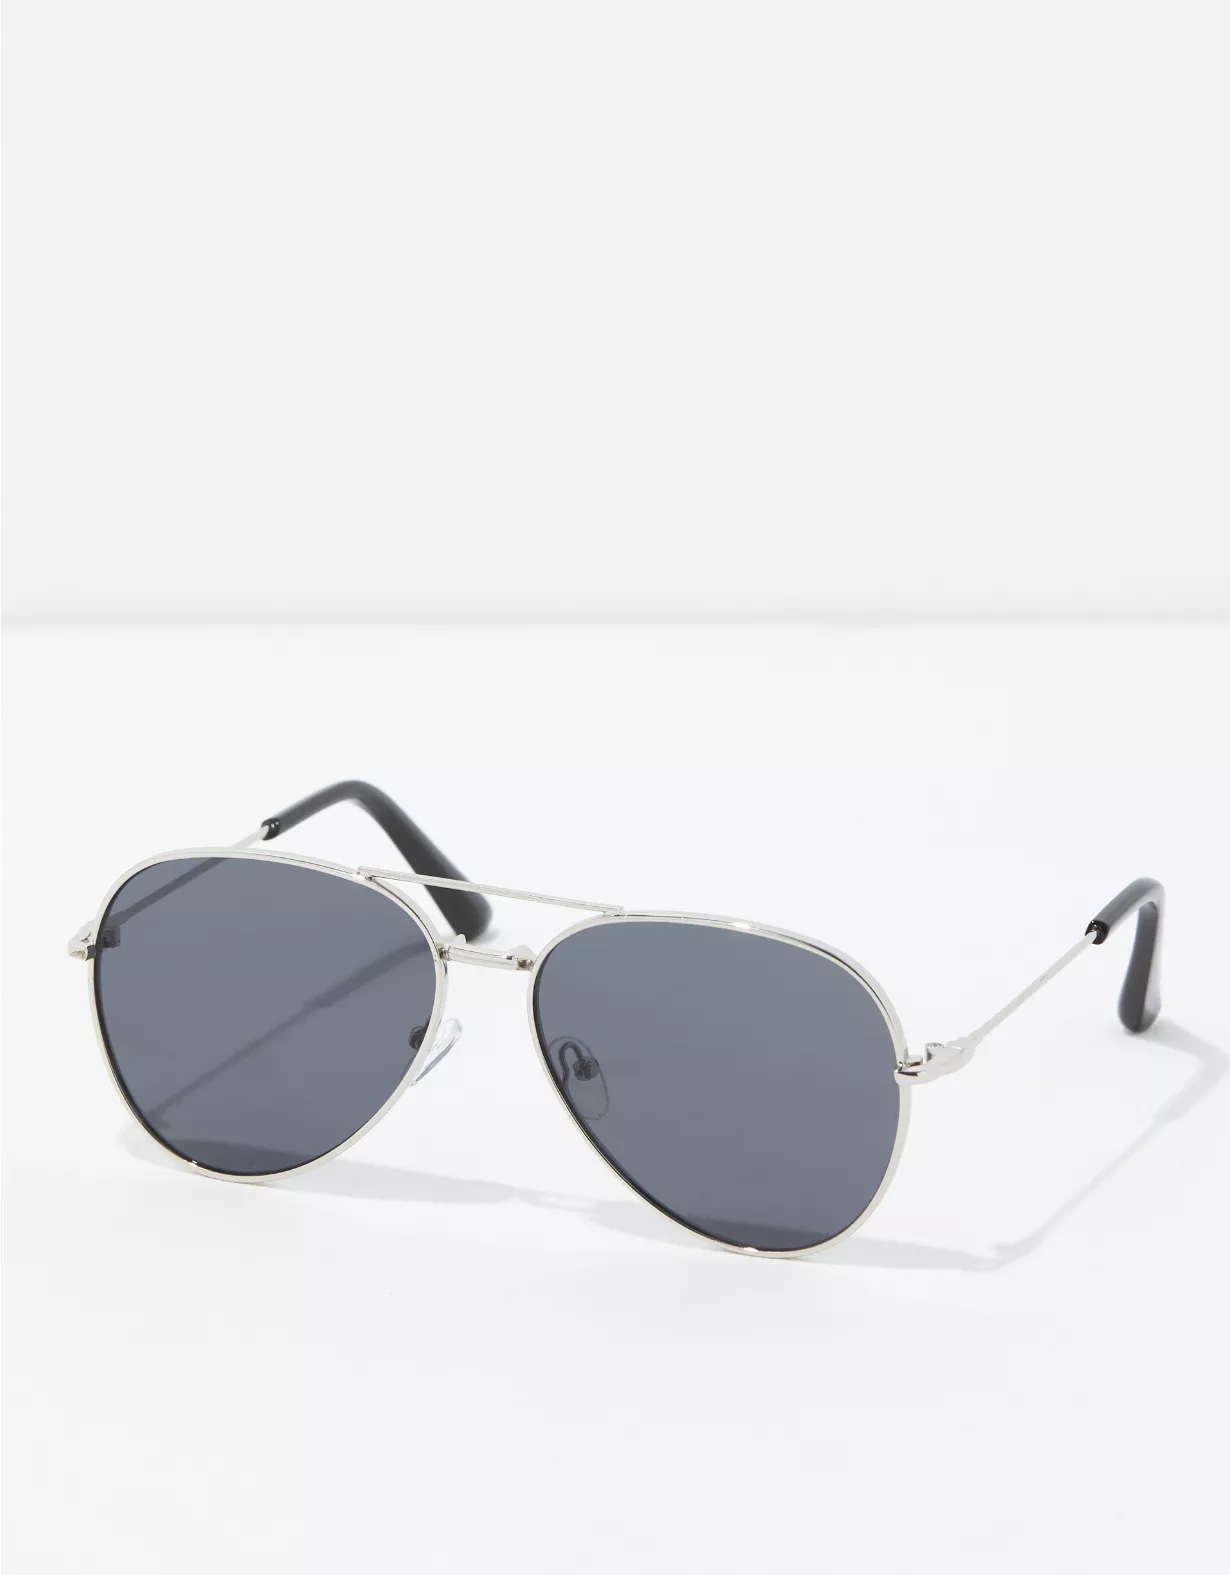 AEO Silver Aviator Sunglasses